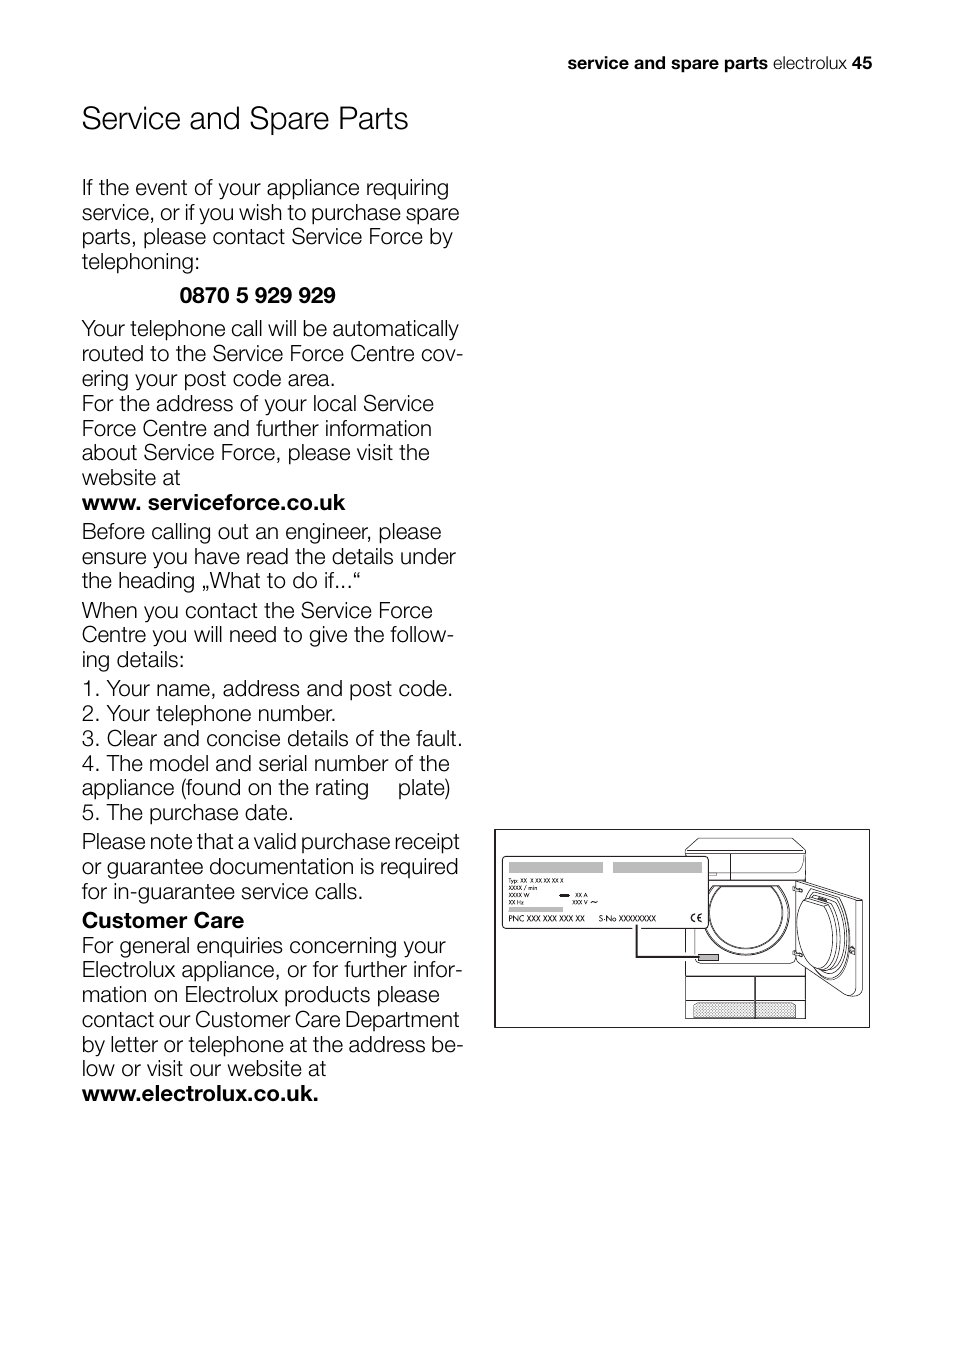 Service and spare parts | Electrolux EDI 96150 W User Manual | Page 45 / 48  | Original mode